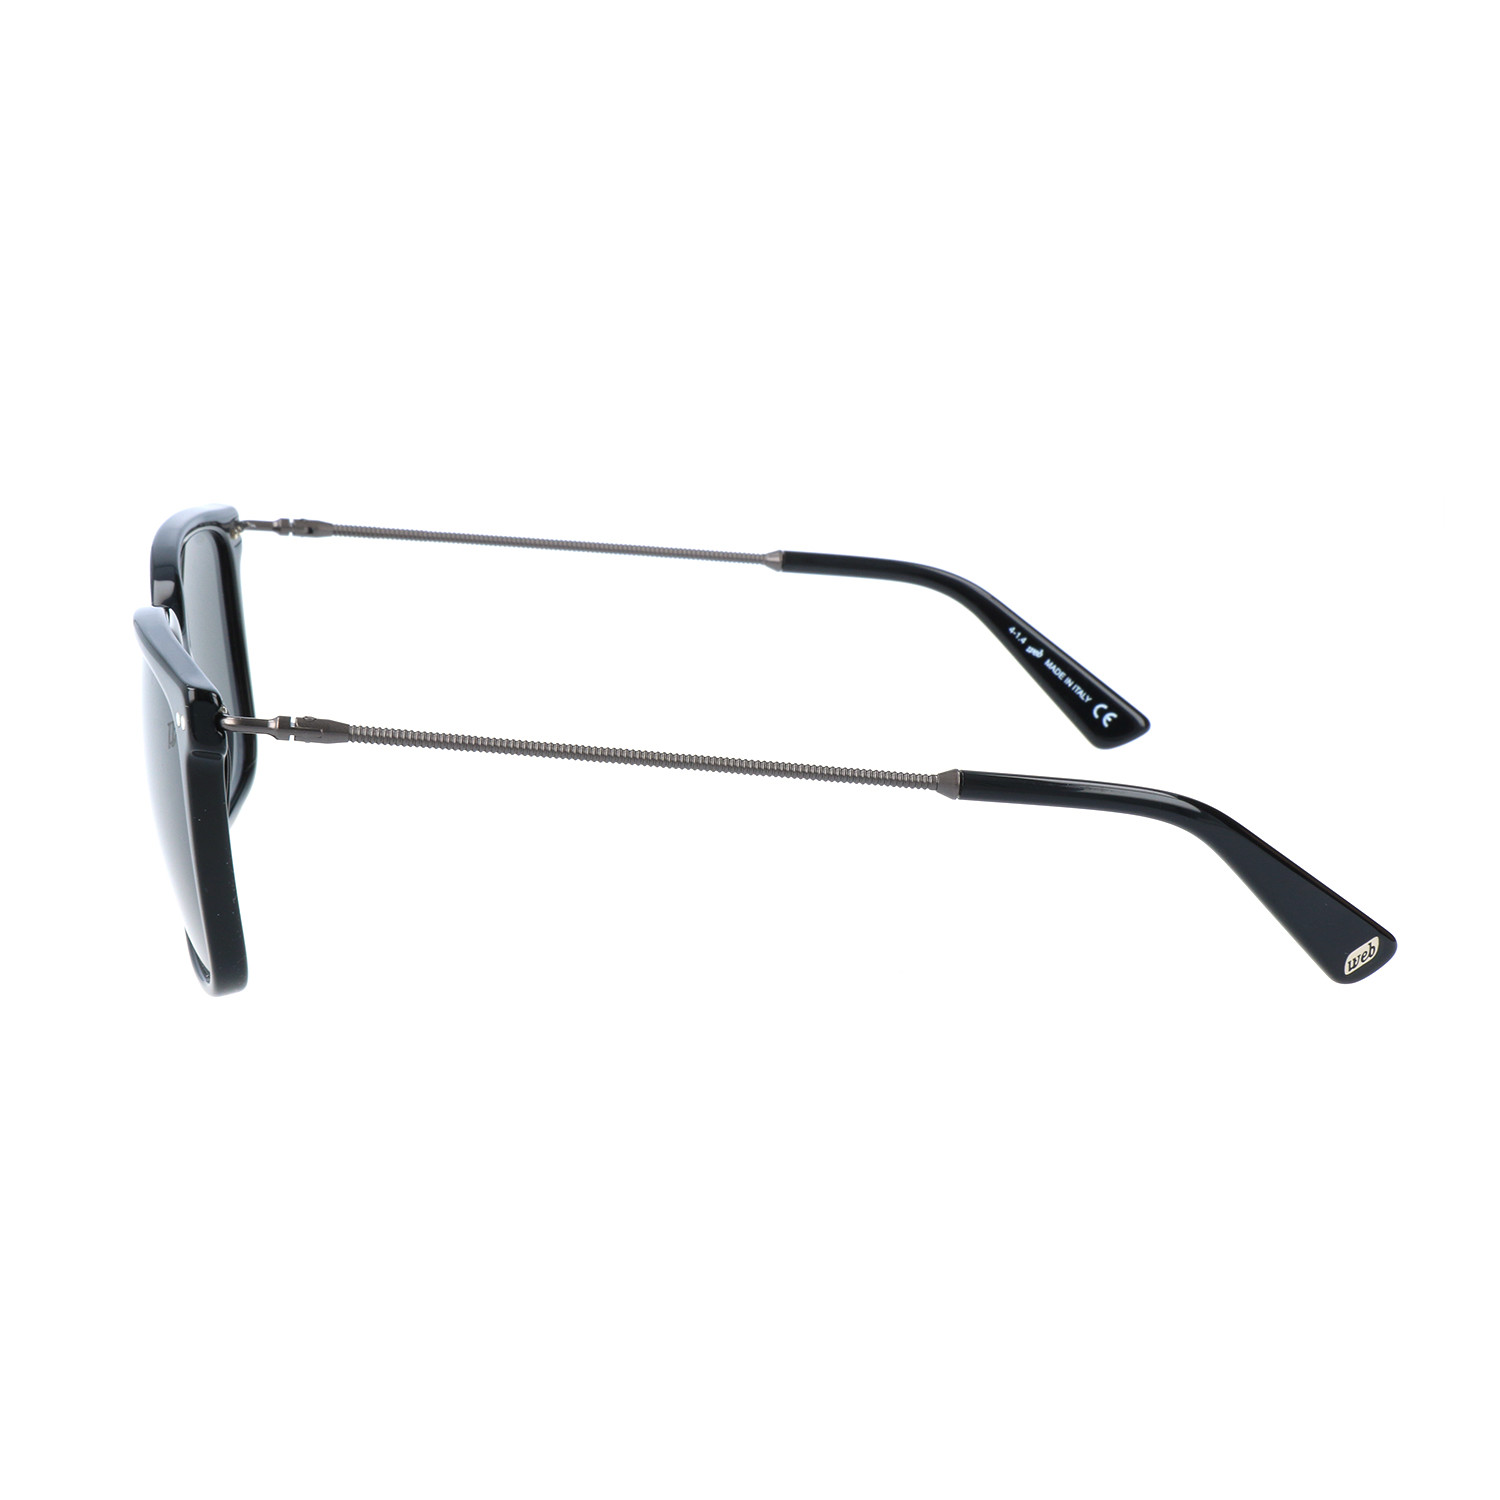 Kelling Skinny Framed Sunglasses // Black + Silver - Web Sunglasses ...